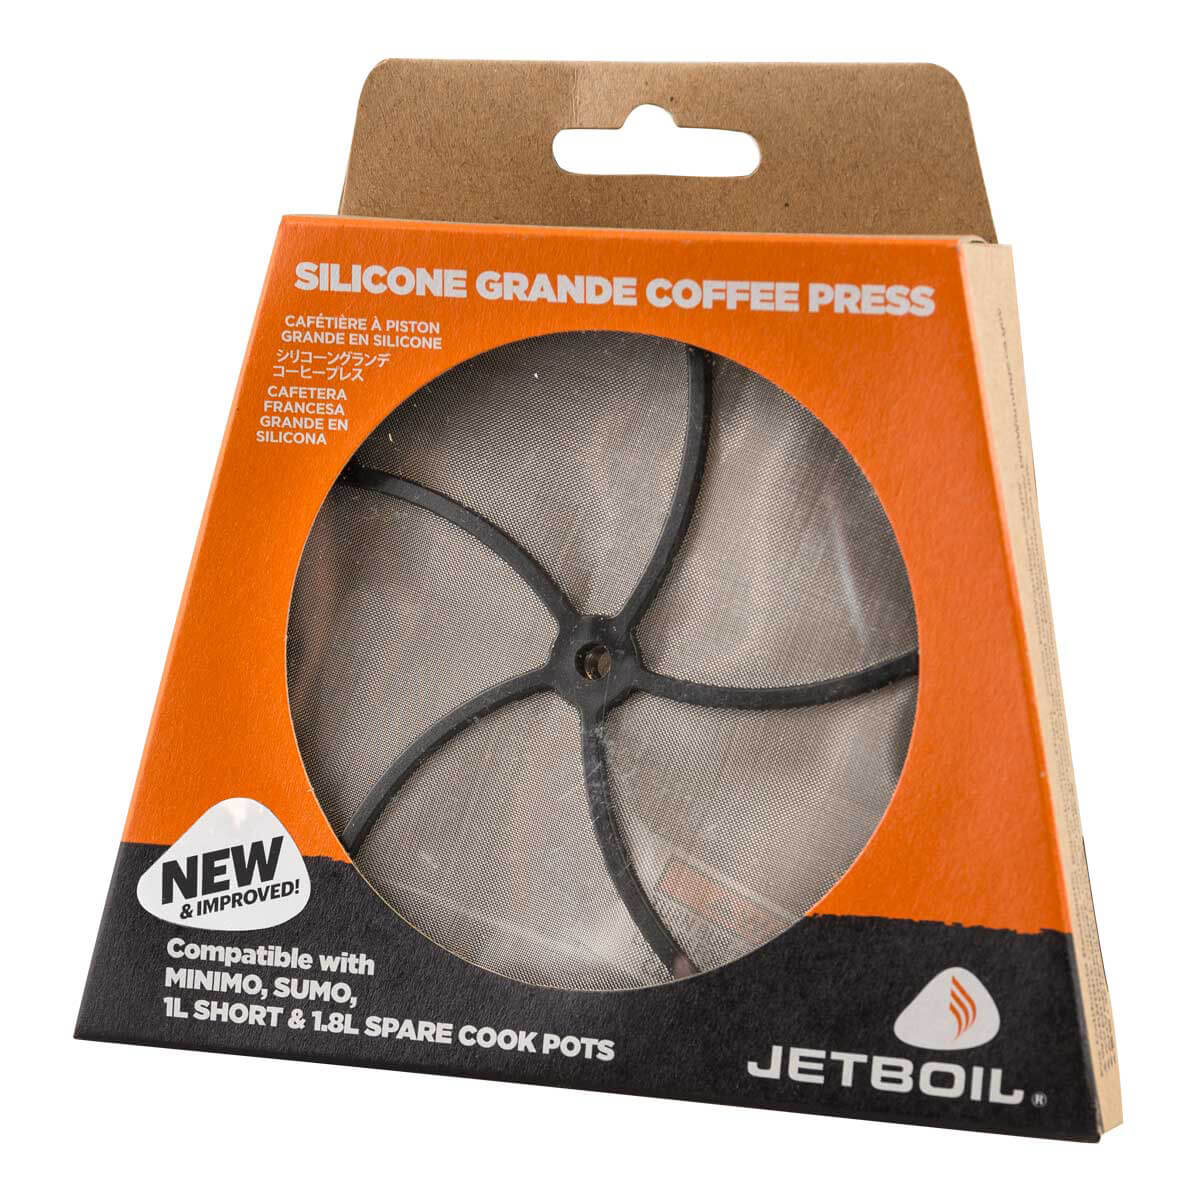 Jetboil Grande Coffee Press